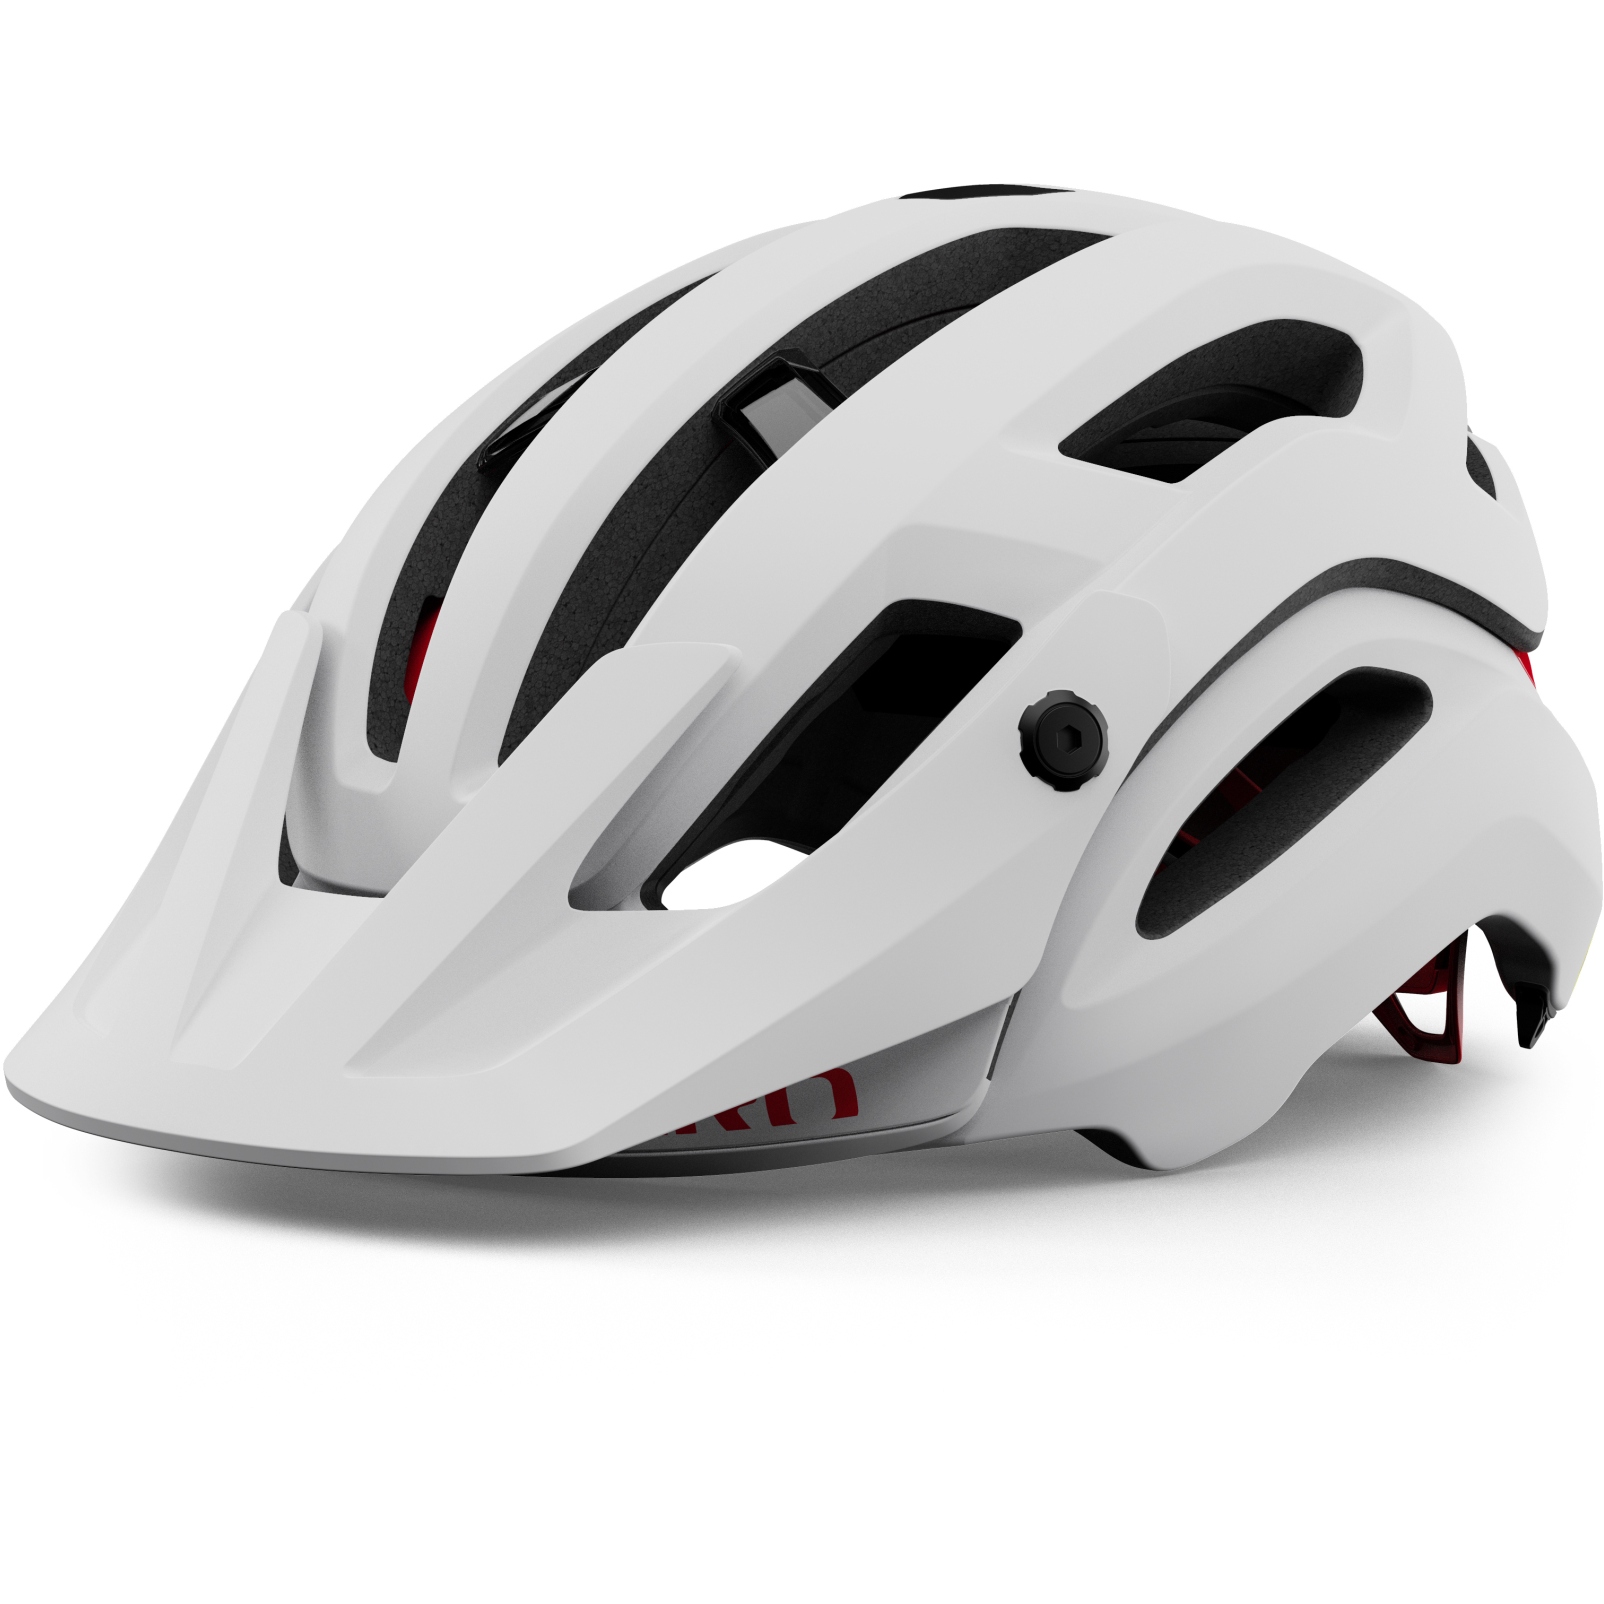 Productfoto van Giro Manifest Spherical Helm - matte white/black